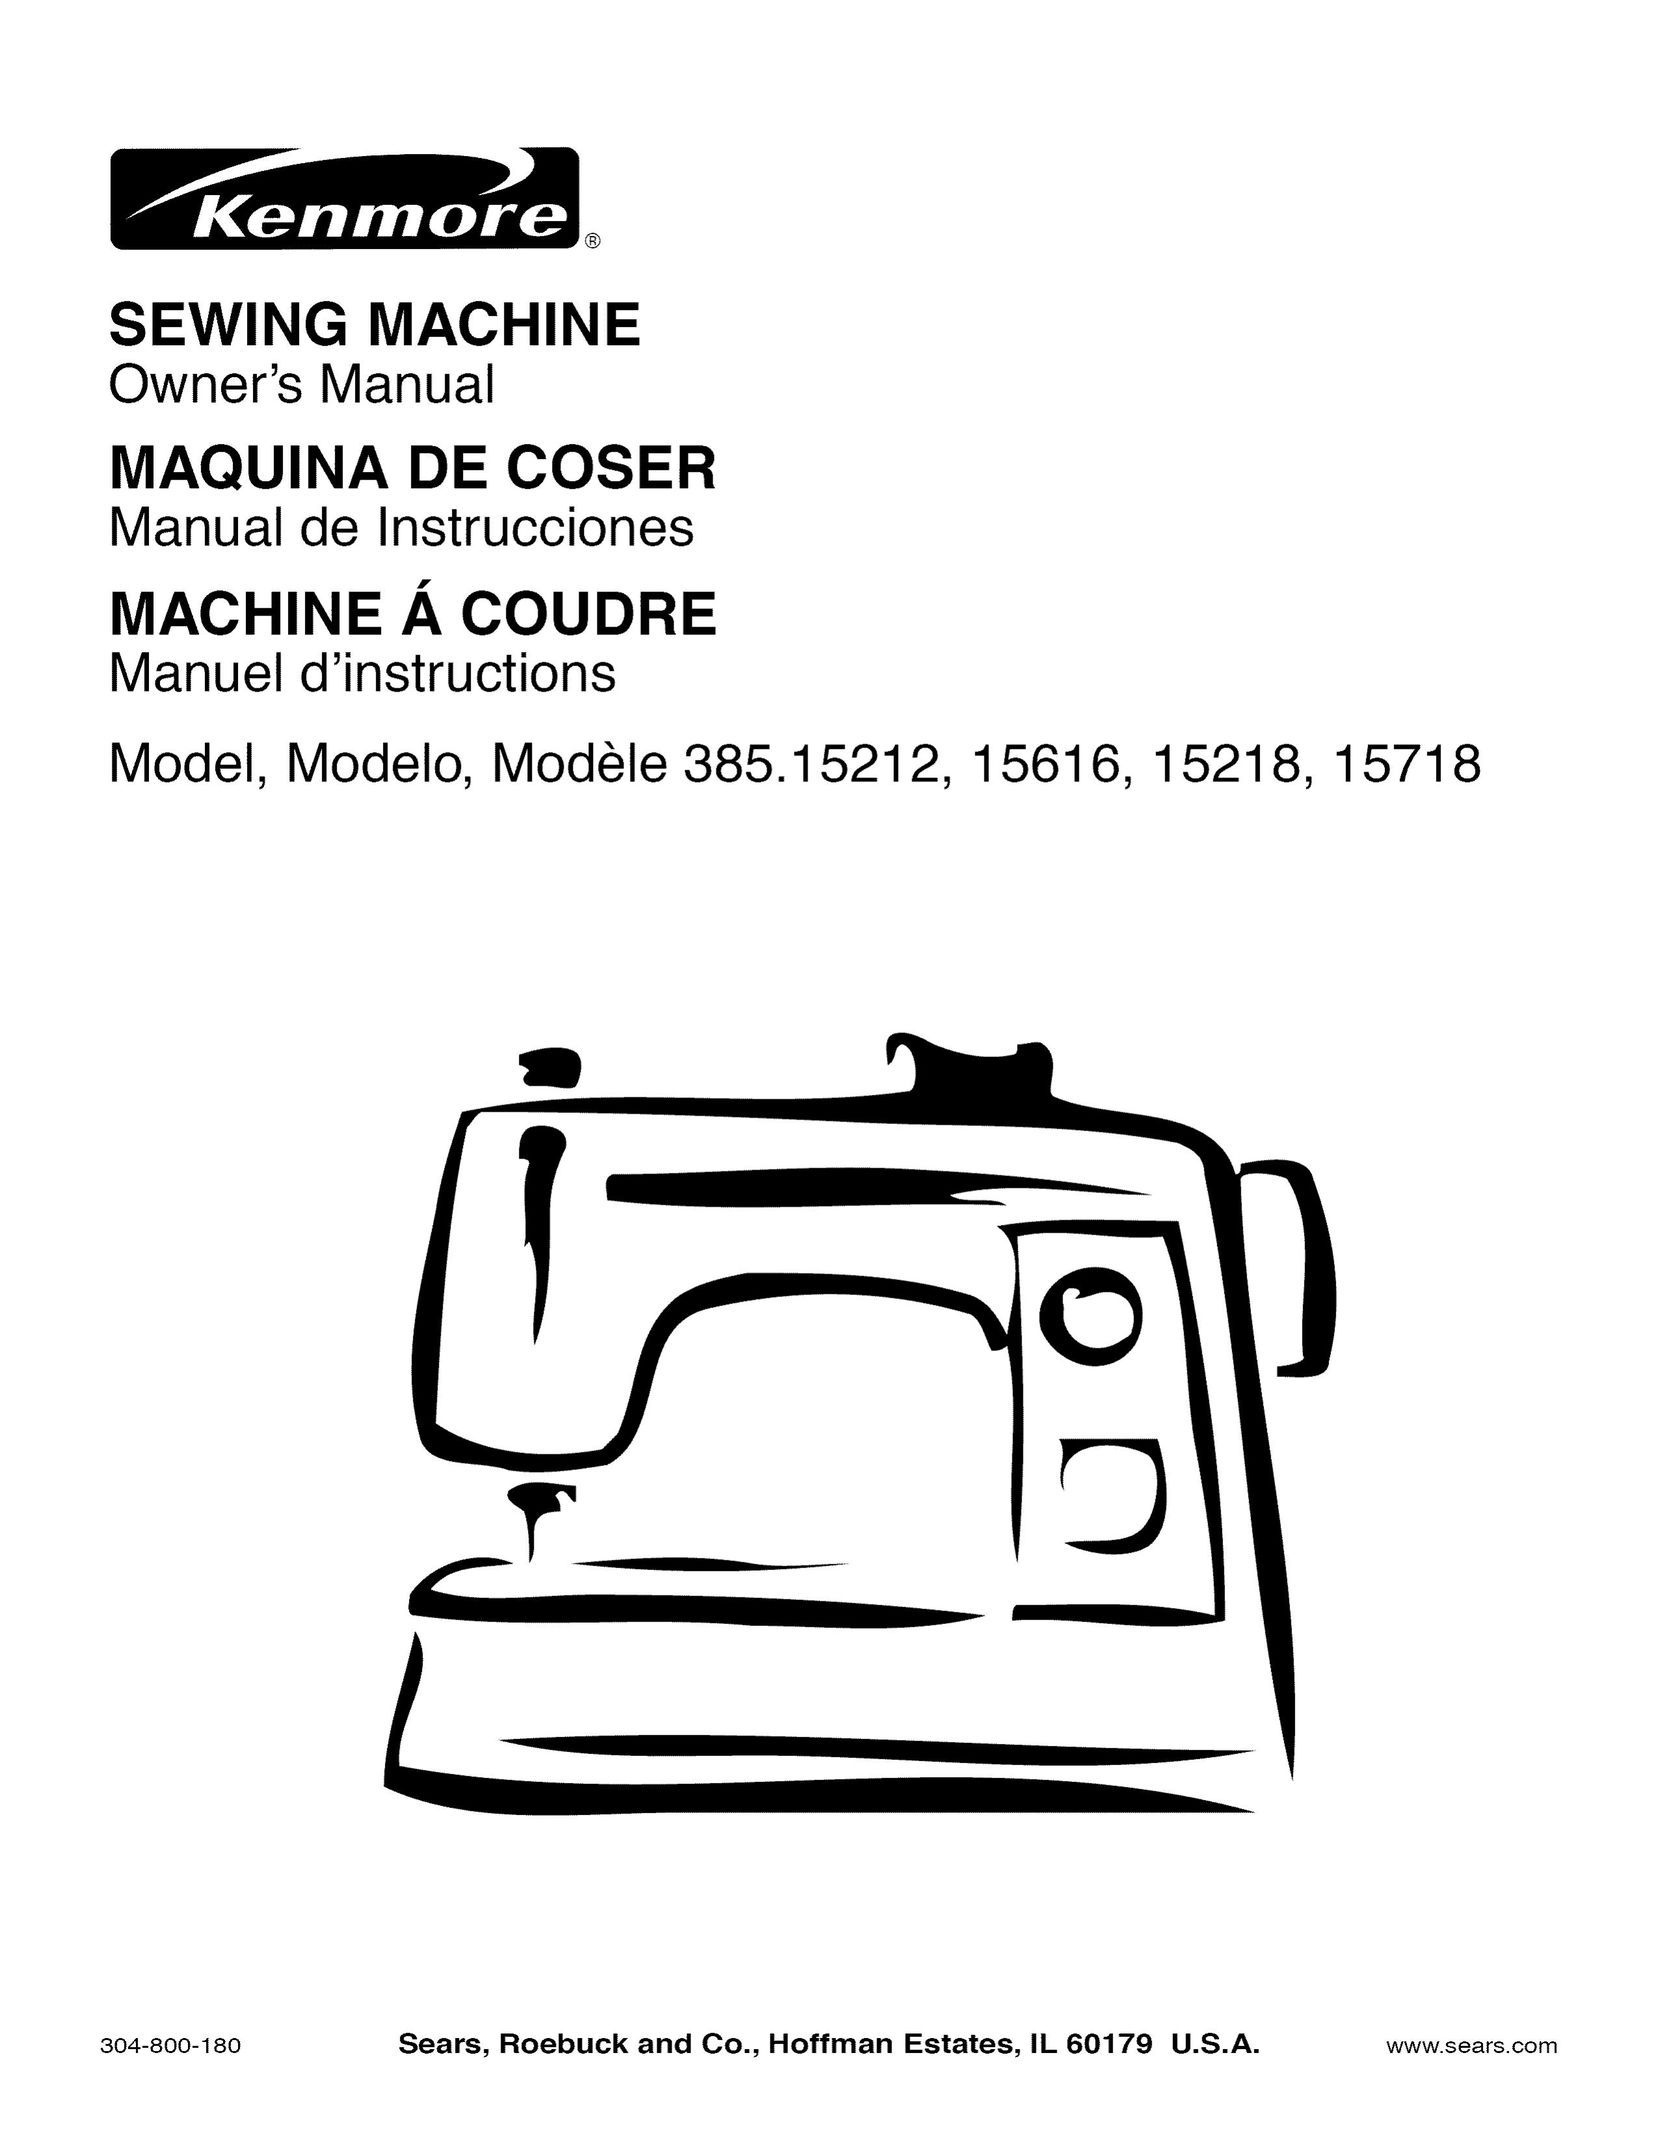 Kenmore 15218 Sewing Machine User Manual